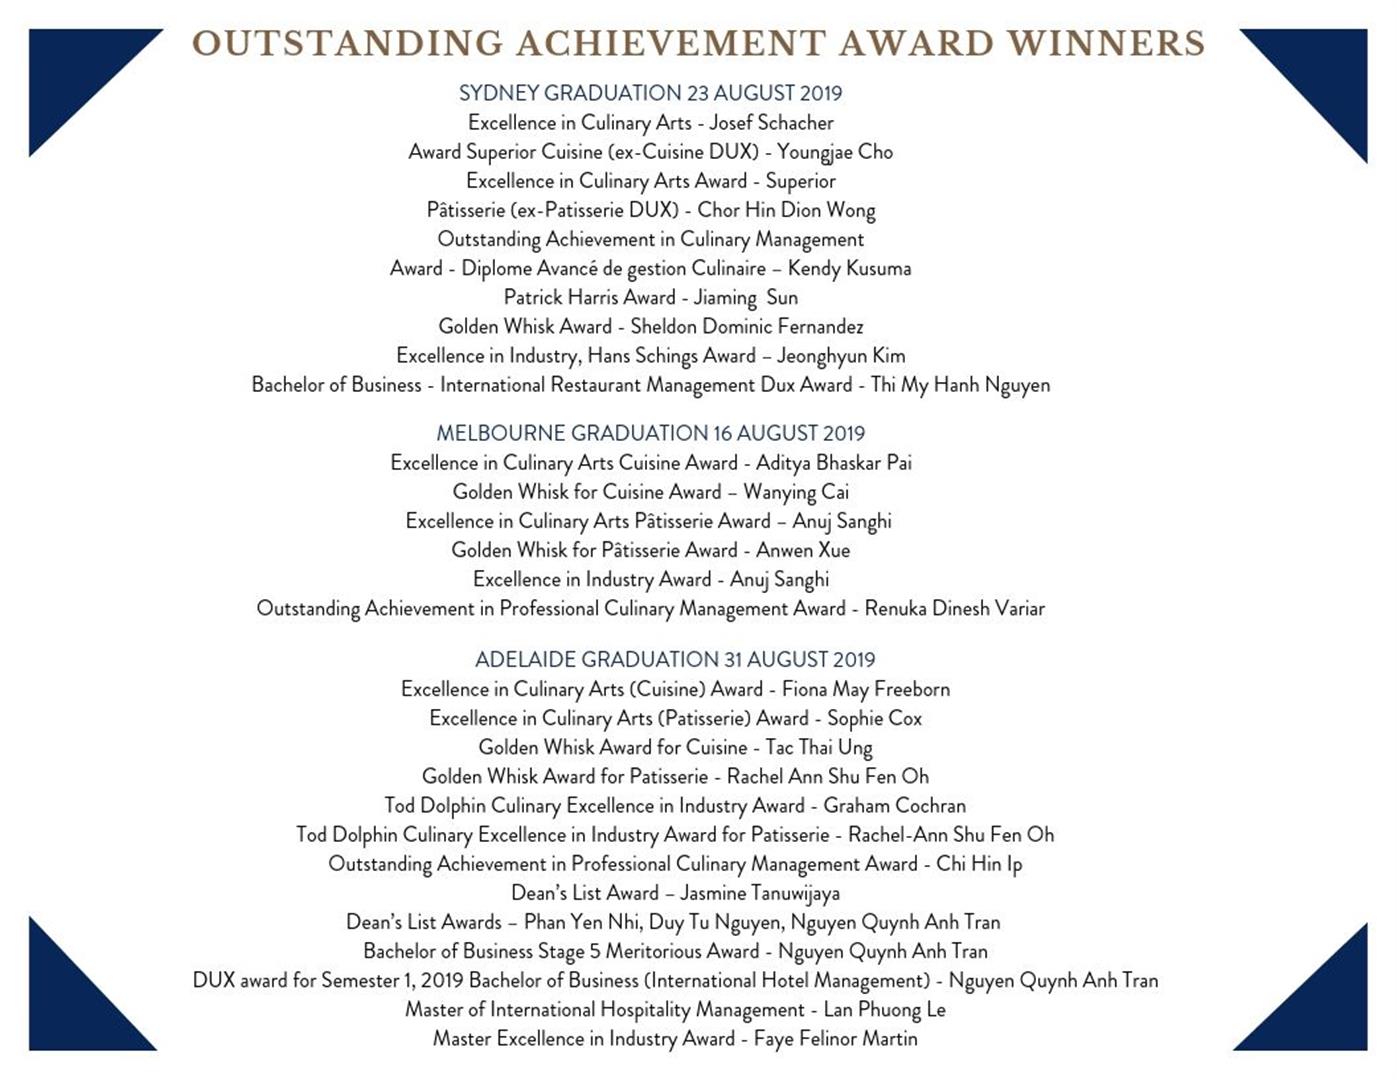 le cordon bleu list of graduation award winners